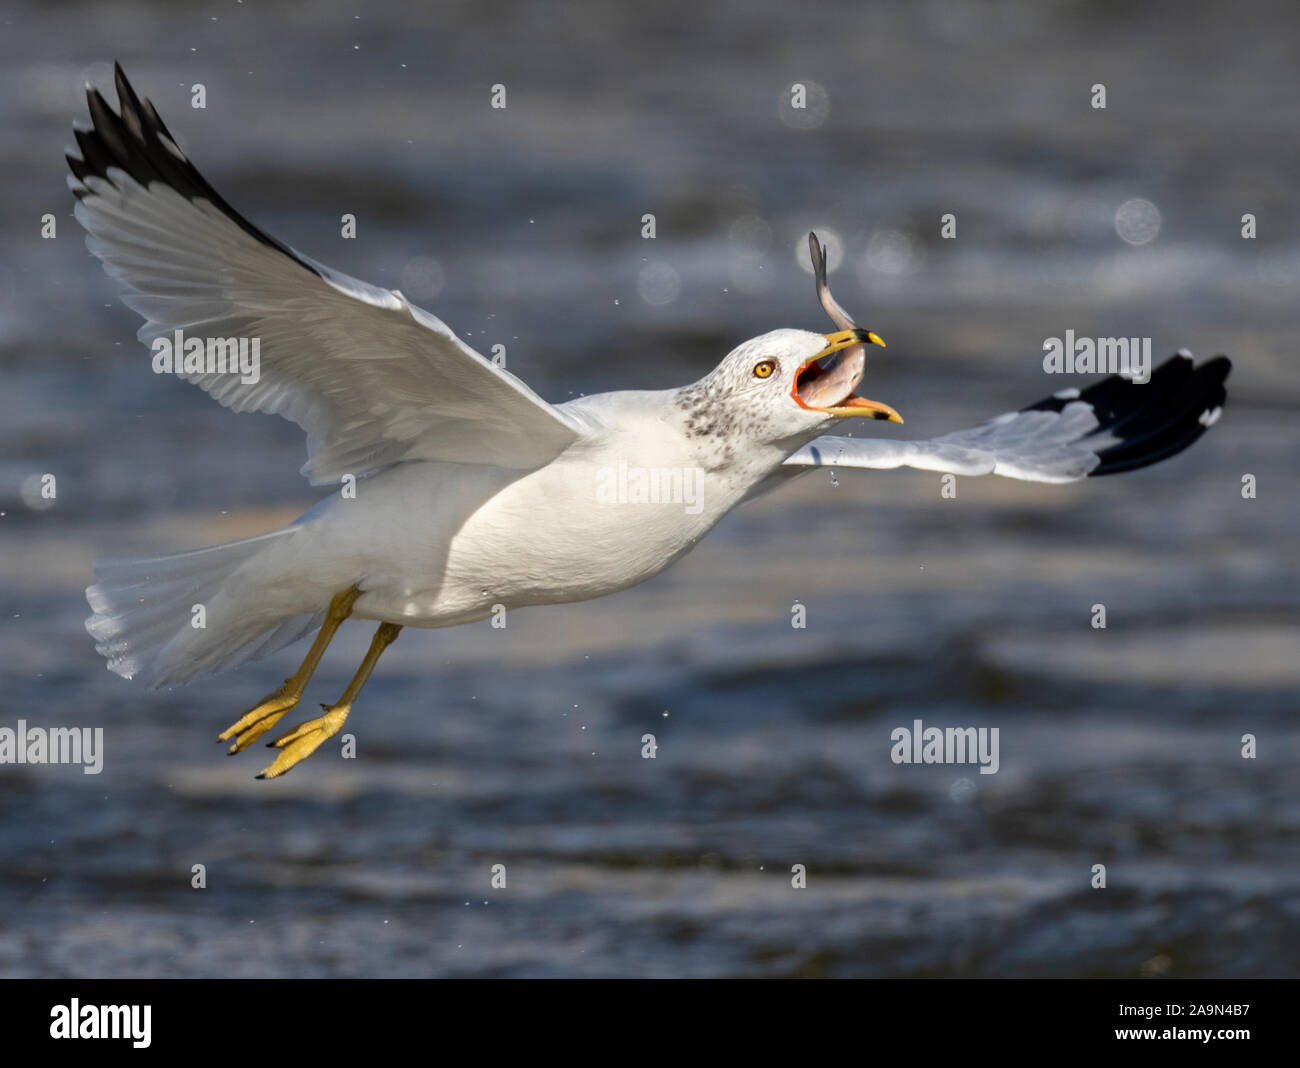 Ring-billed gull (Larus delawarensis) swallowing fish in flight, Iowa, USA Stock Photo